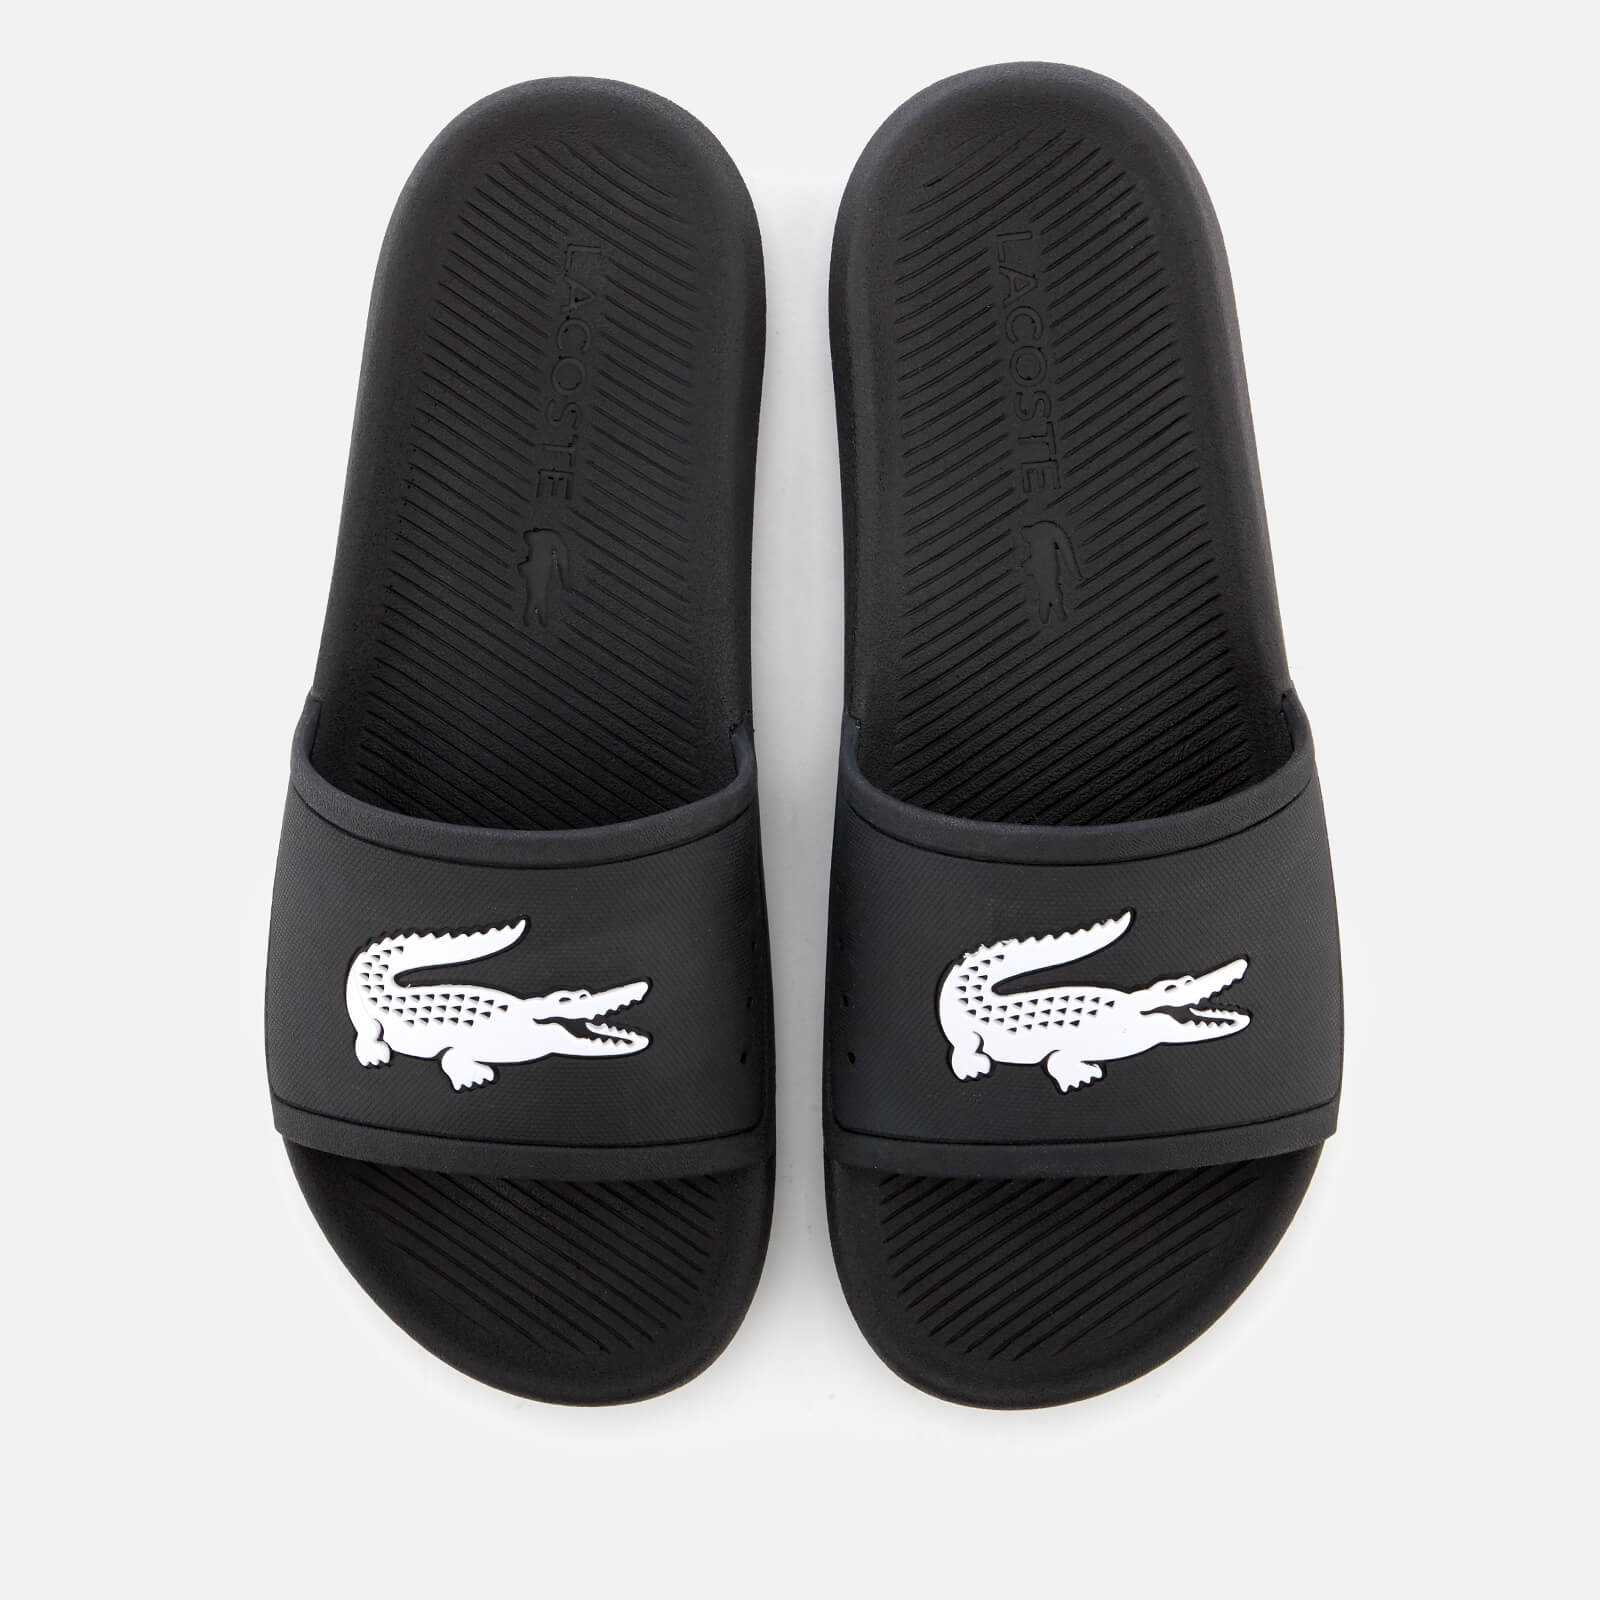 Lacoste Men's Croco Slide 119 1 Sandals - Black/White - UK 7 - Black/White